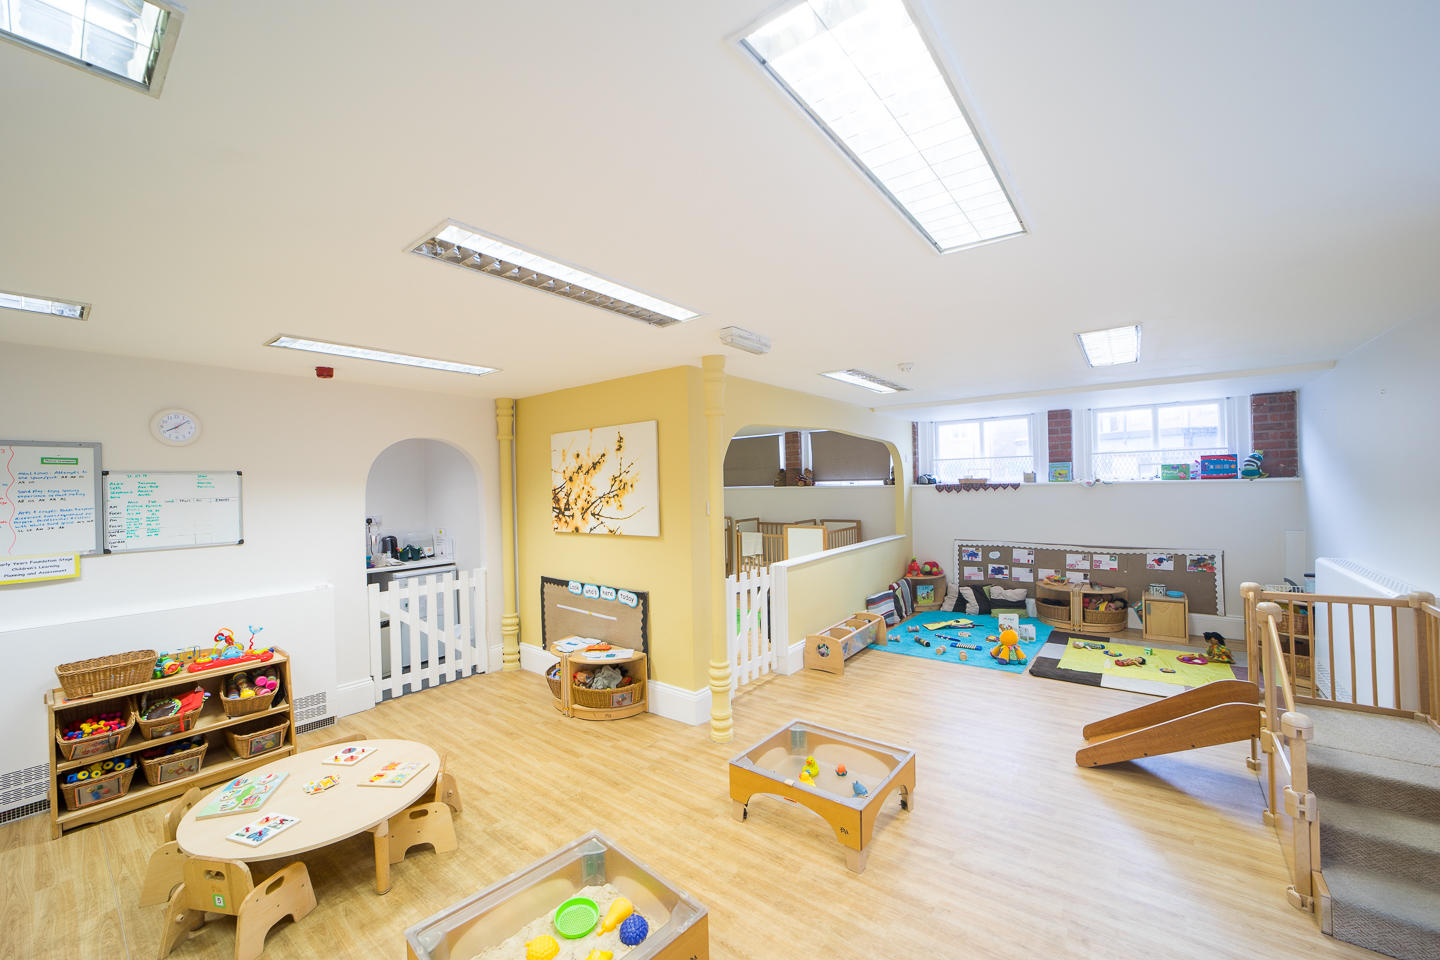 Bright Horizons Brentford Day Nursery and Preschool Brentford 03702 188247